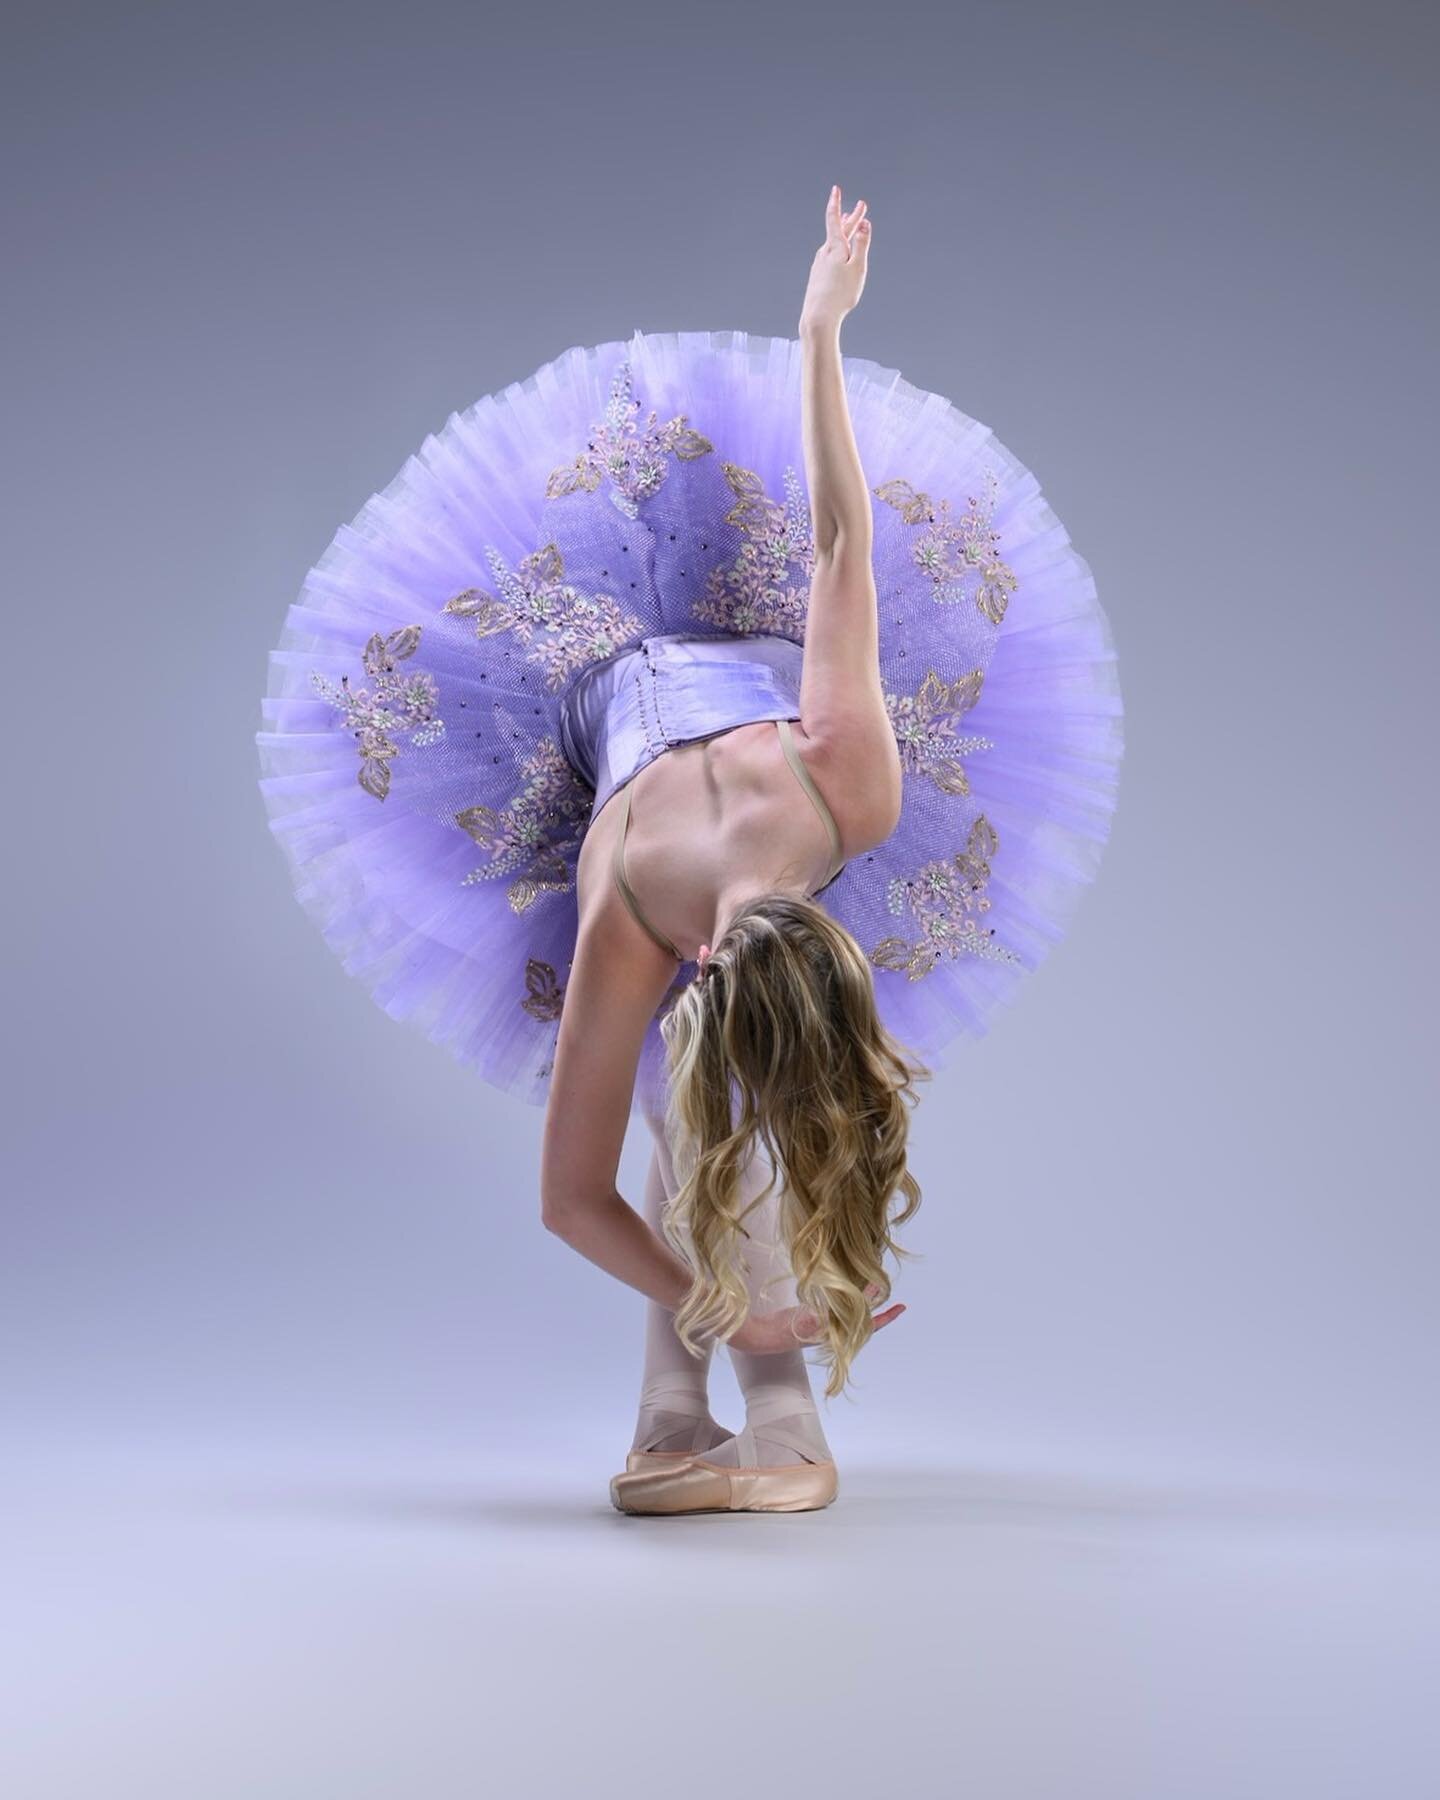 Hope everyone enjoys the wonderful weather today!! ☀️ // feat.  @madison_ava_ave in her beautiful tutu 😍💜 // 2023 
_________________________________________
#candidlycreated #franciscoestevezphotography #photoshoot #balletdancer #photography #balle